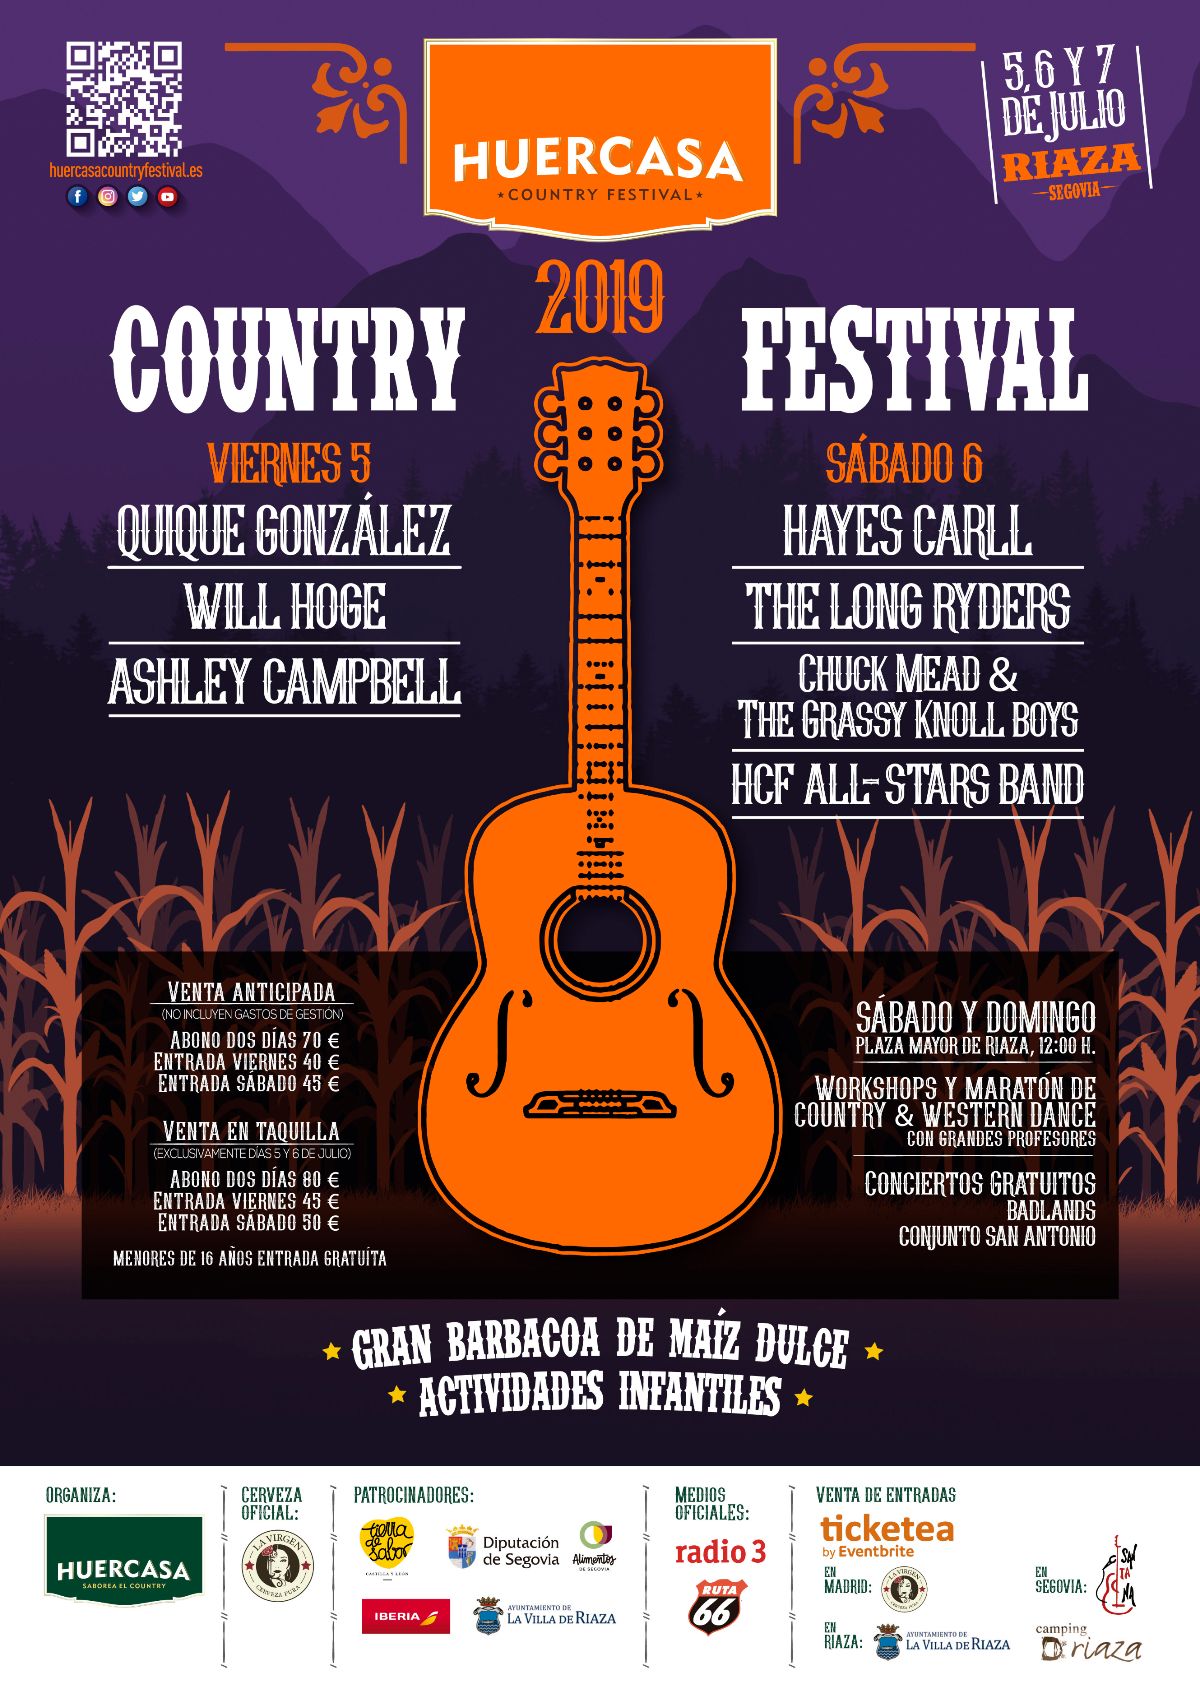 Huercasa Country Festival 2019